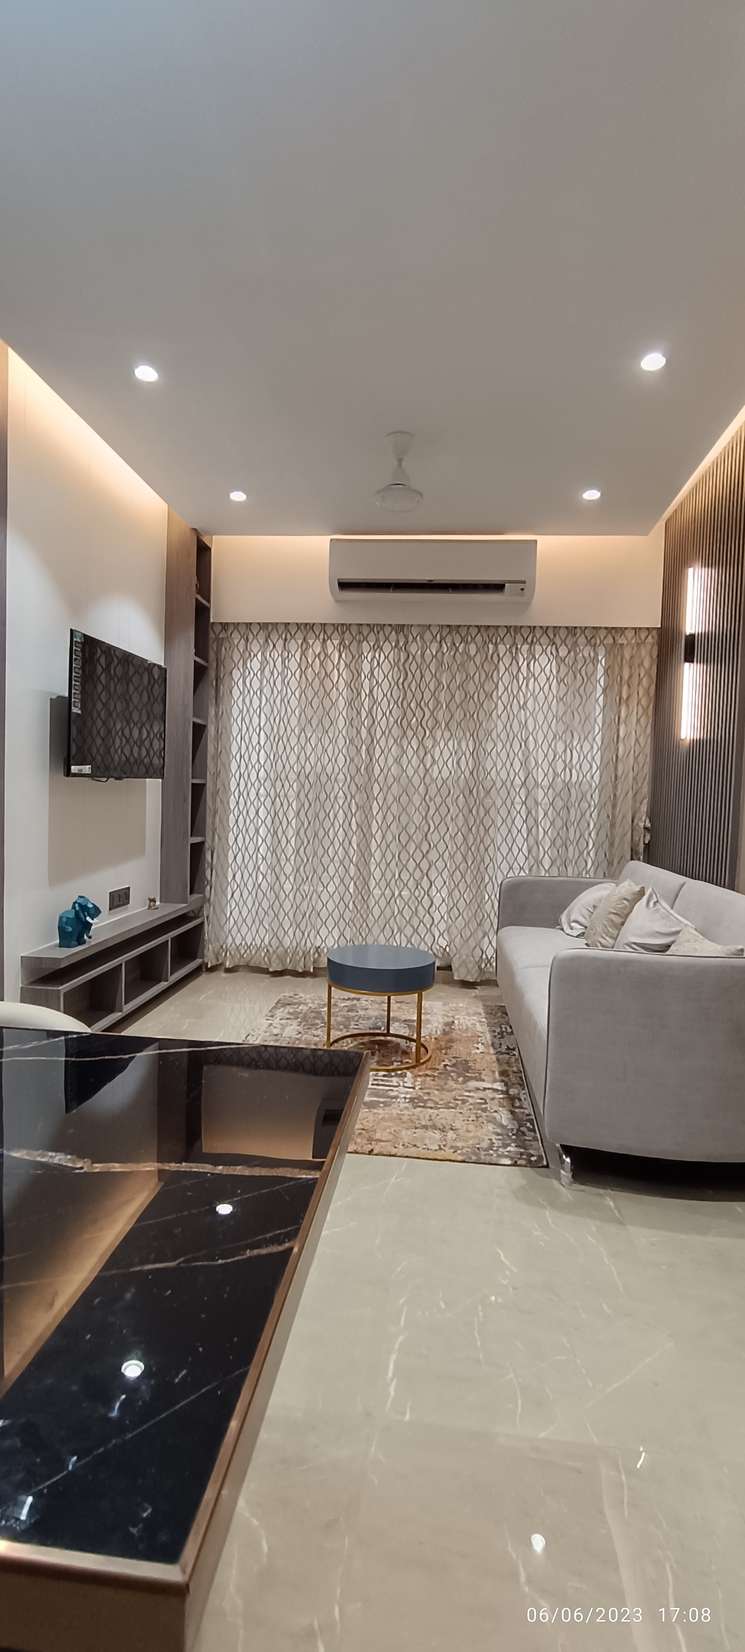 1 Bedroom 620 Sq.Ft. Apartment in Boisar Mumbai